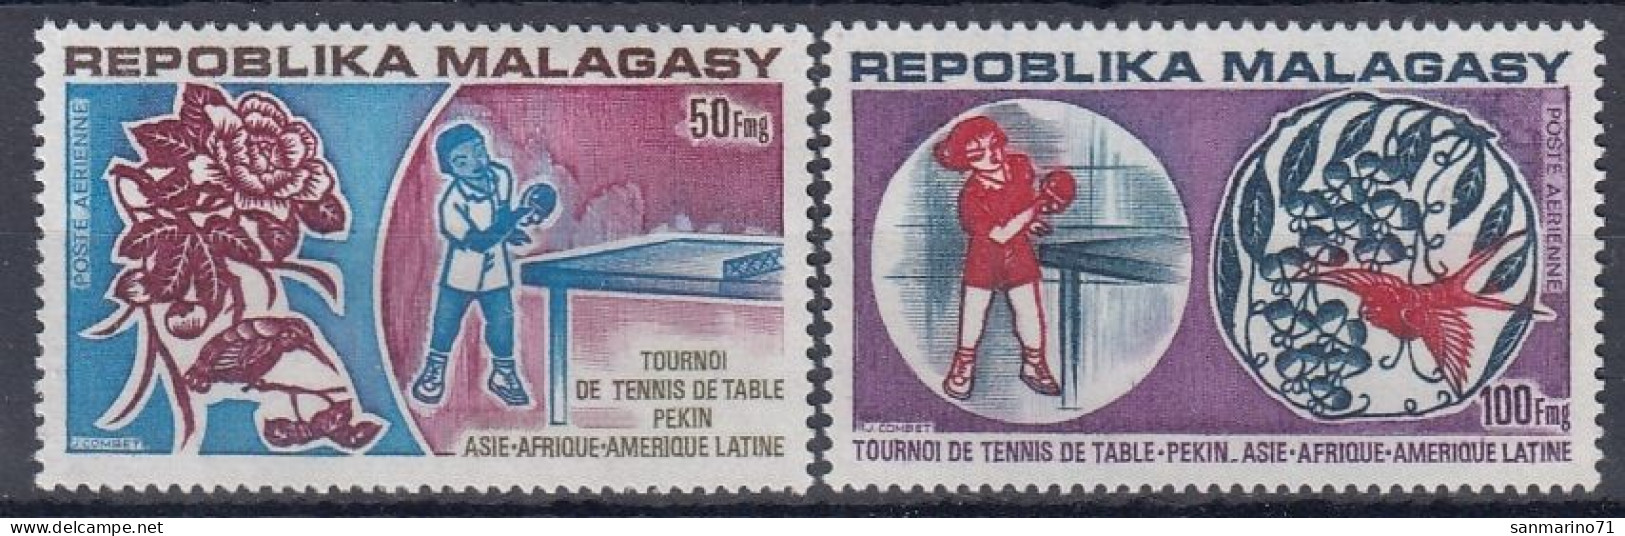 MADAGASCAR 710-711,unused - Tischtennis